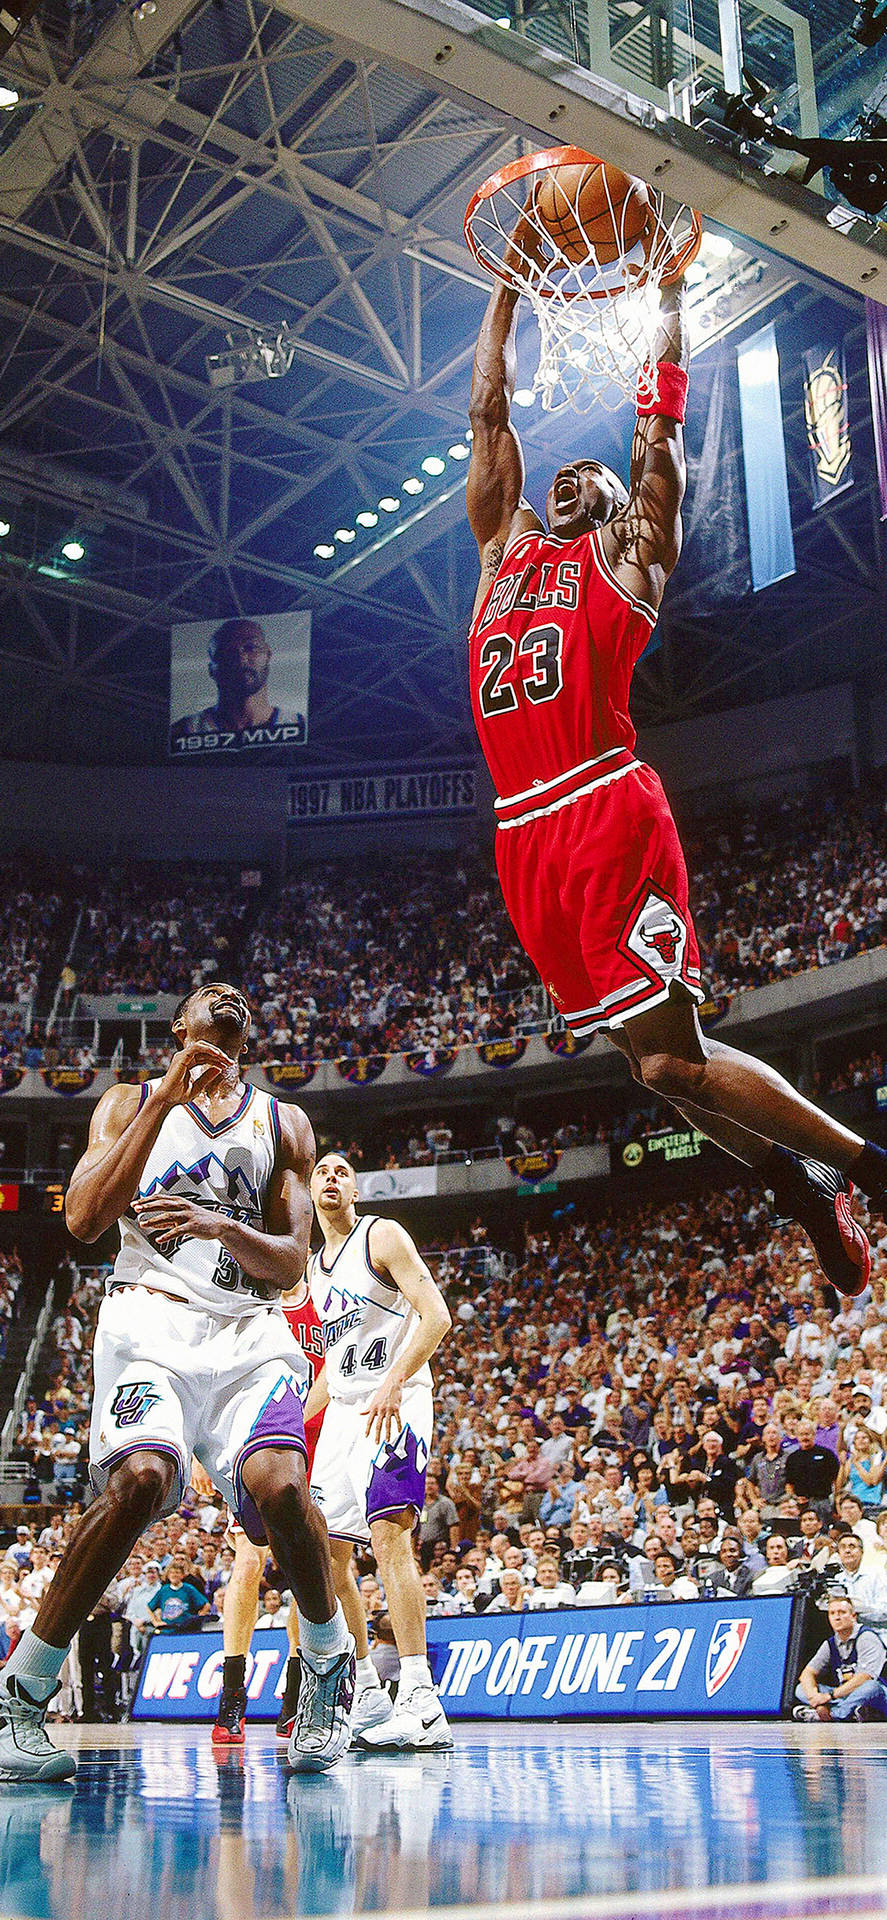 American Basketball Player Michael Jordan NBA Finals Sports iPhone Wallpaper